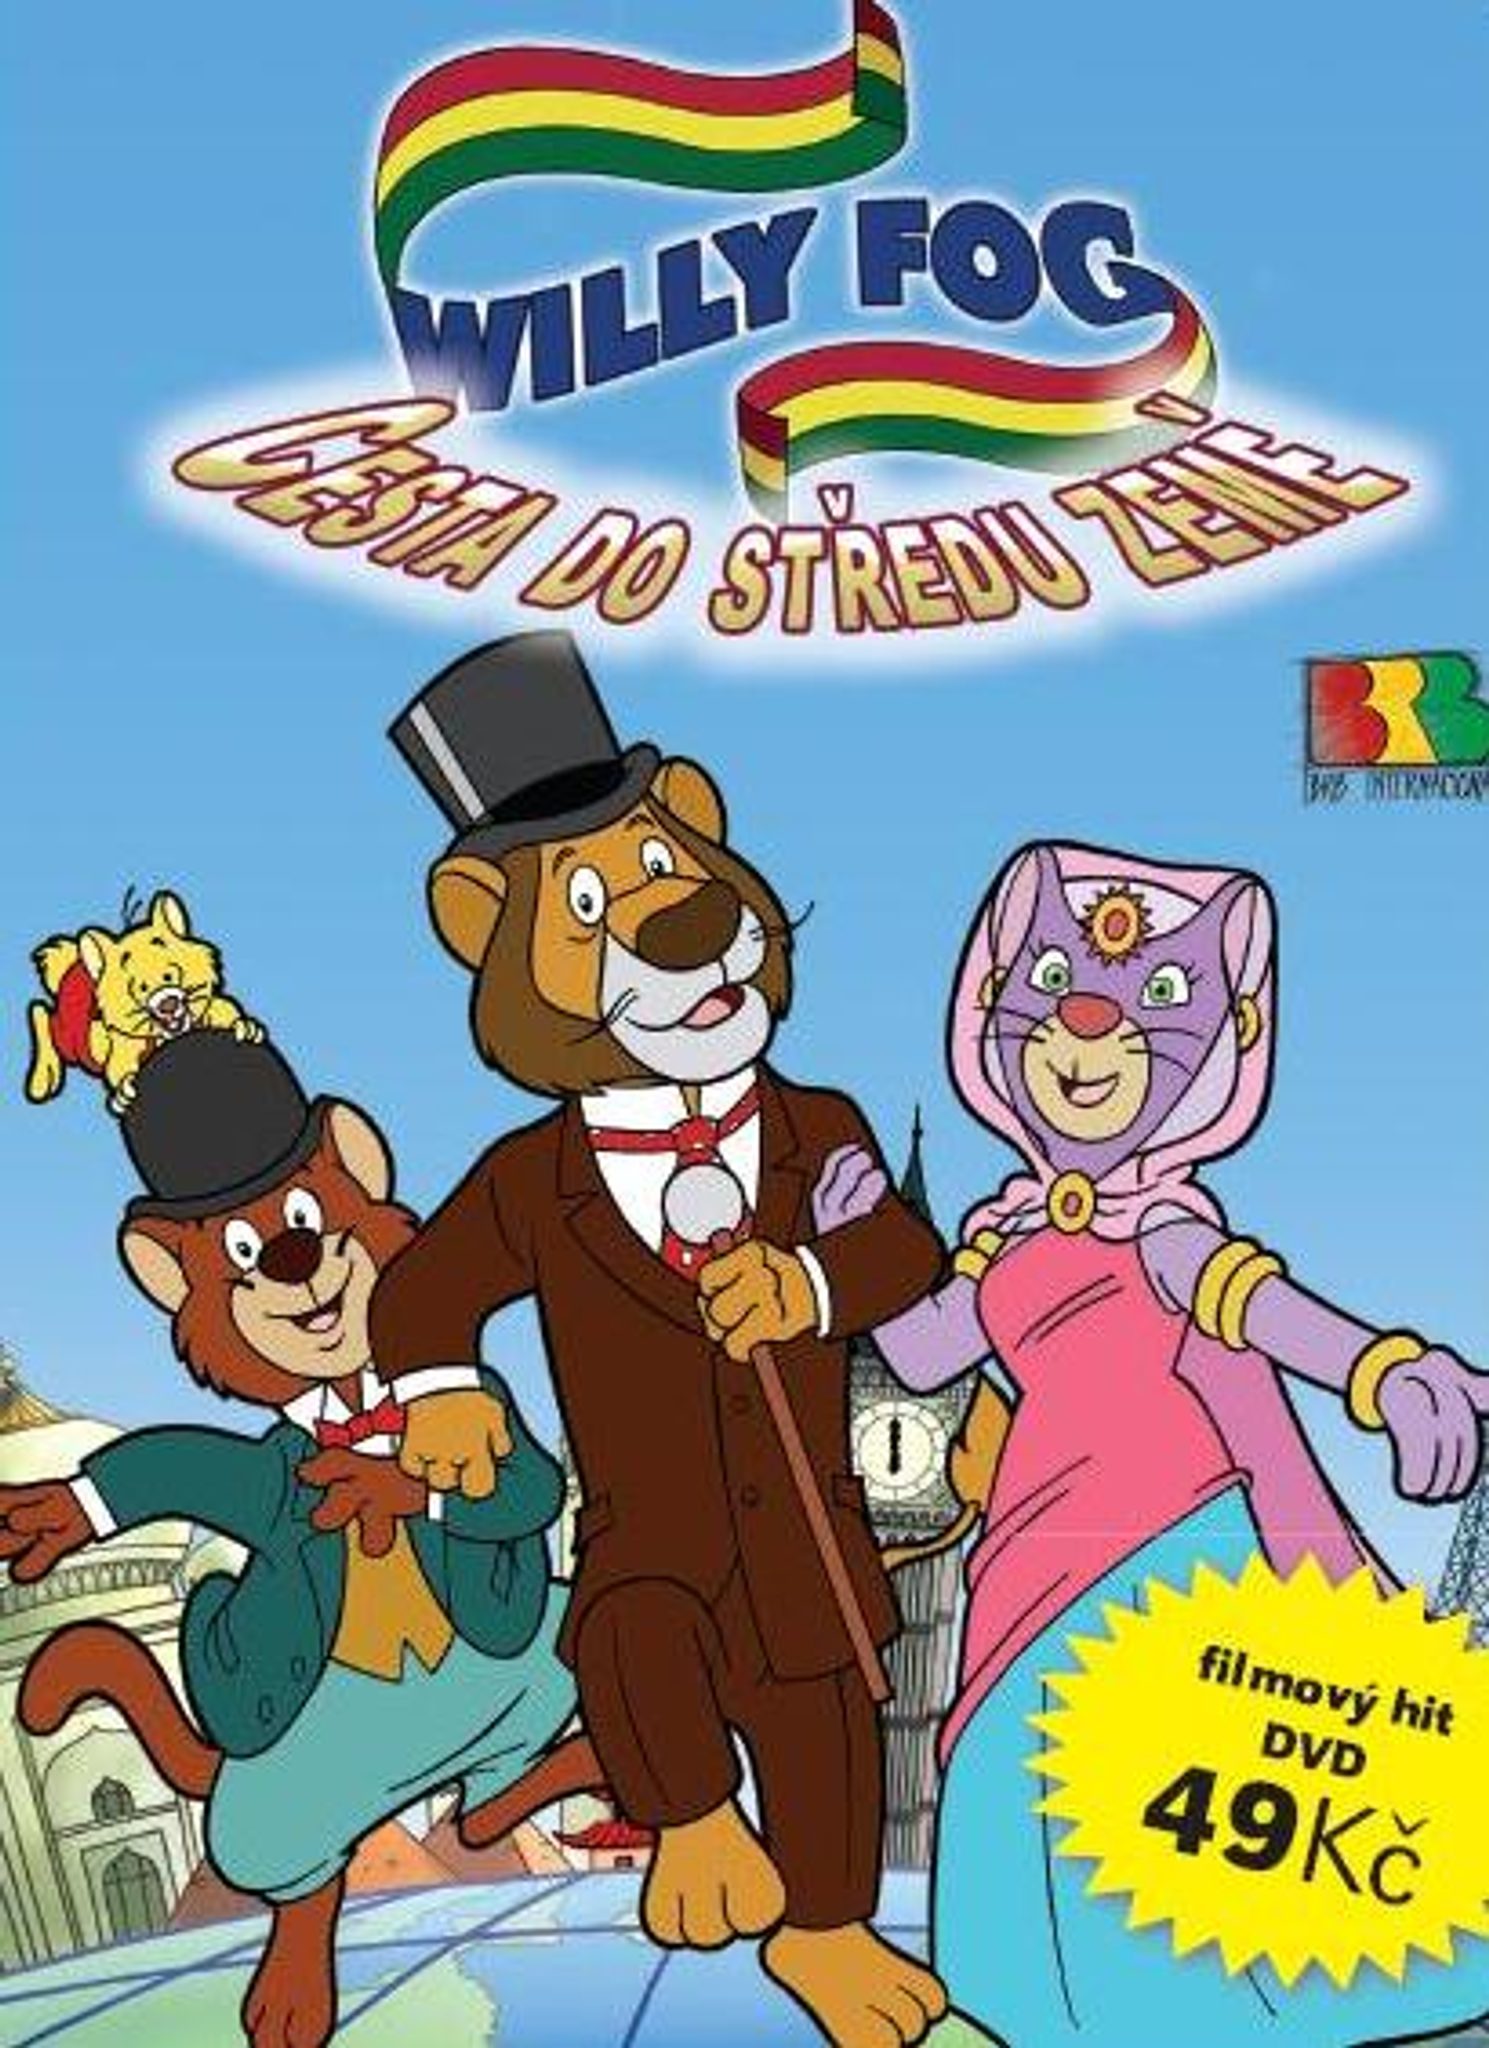 DVD Willy Fog - Cesta do stedu zem 1